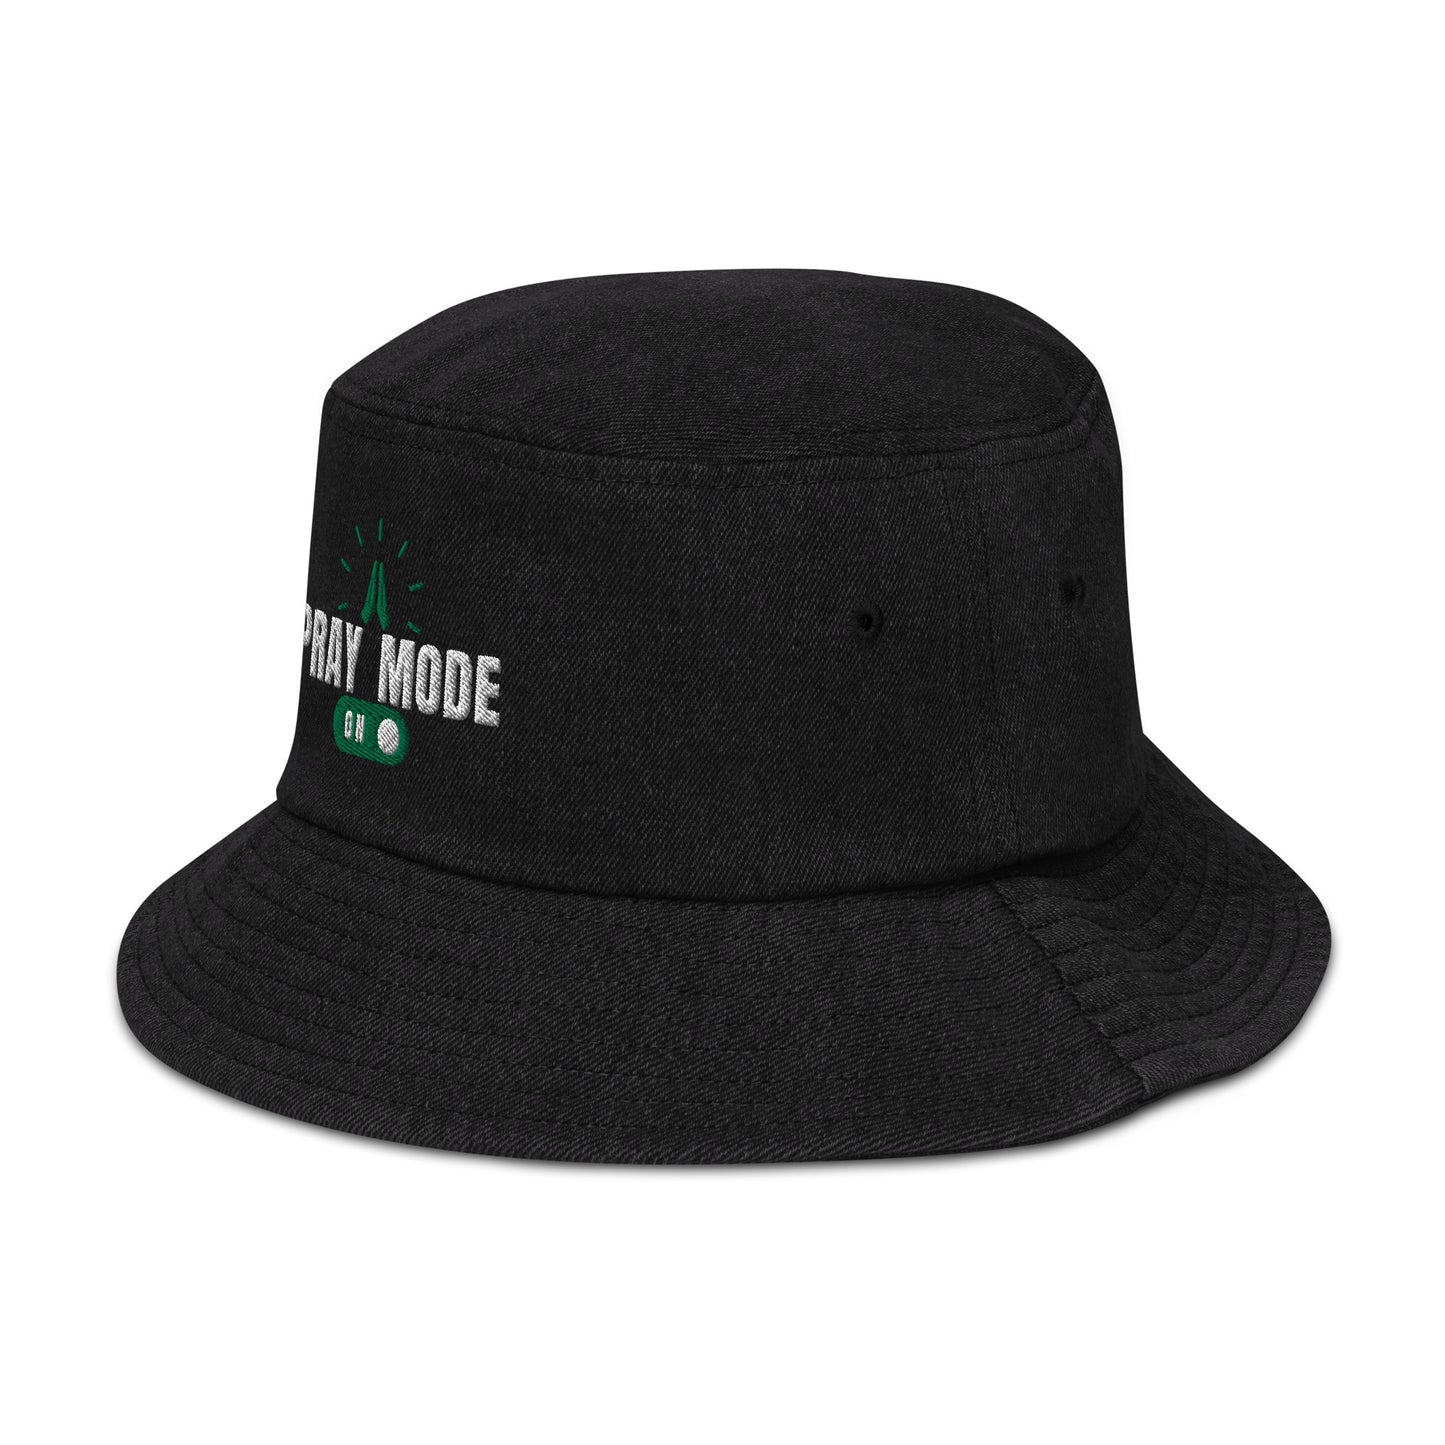 Pray Mode On - Denim bucket hat